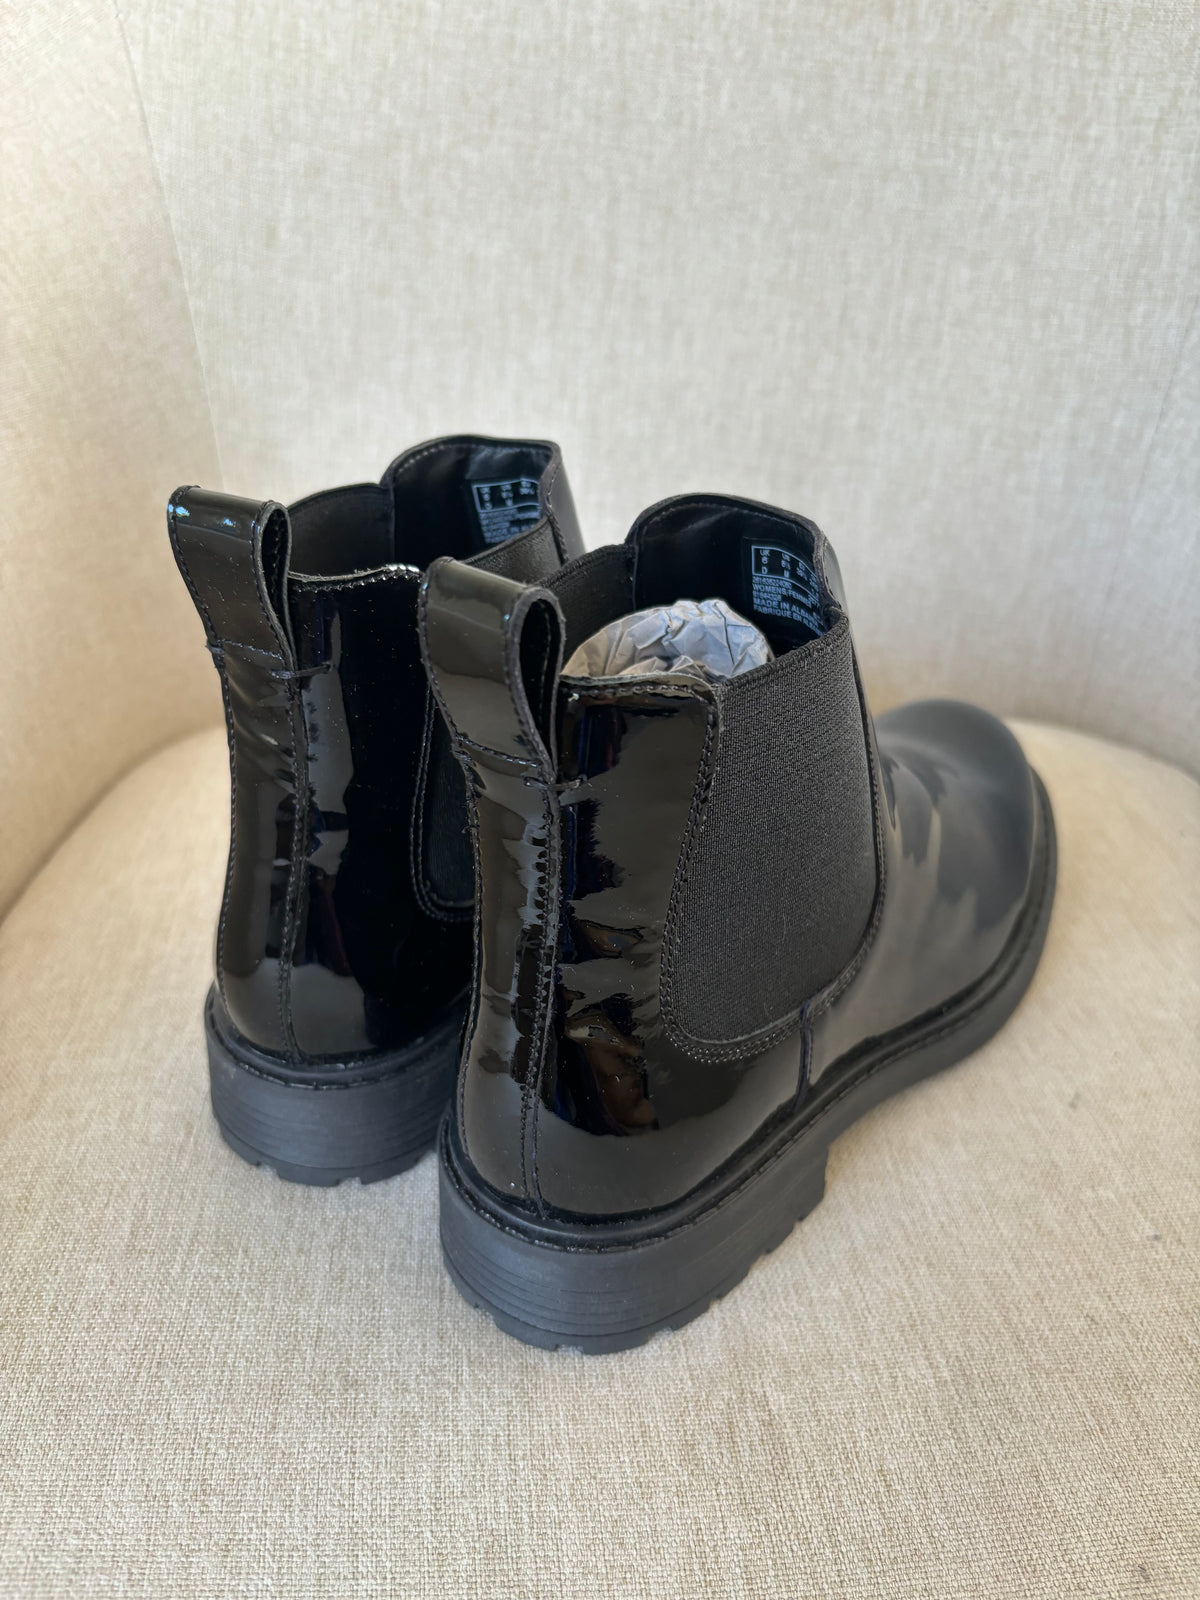 Black Patent Orinoco2 Lane Boots by Clarks Size 6D